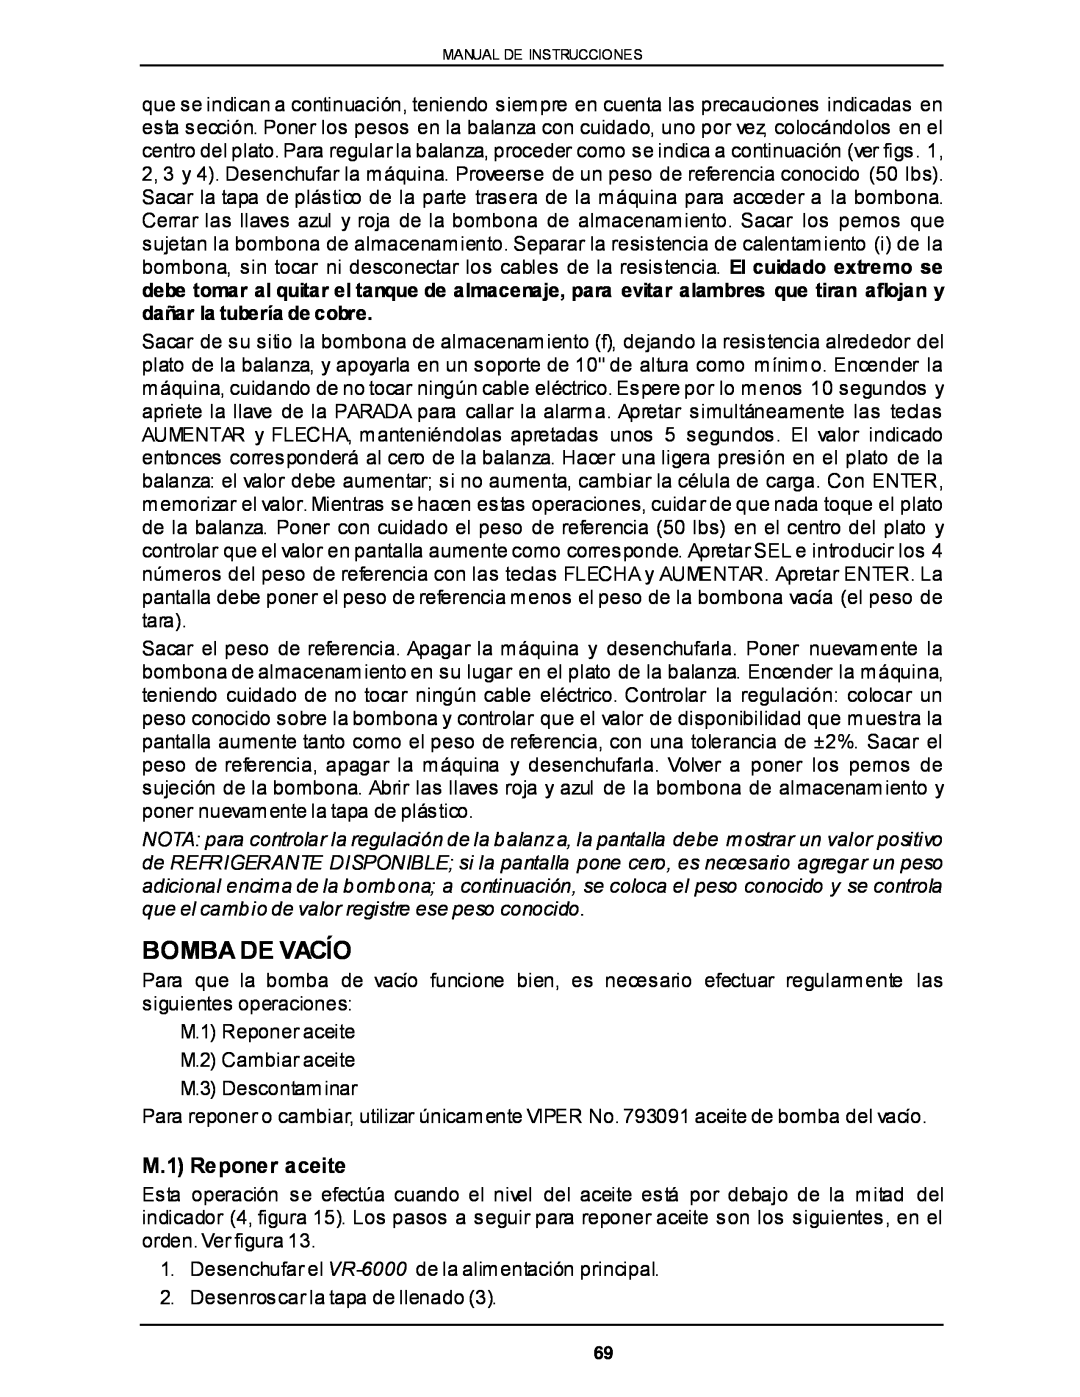 Viper VR-6000 owner manual Bomba De Vacío, M.1 Reponer aceite 